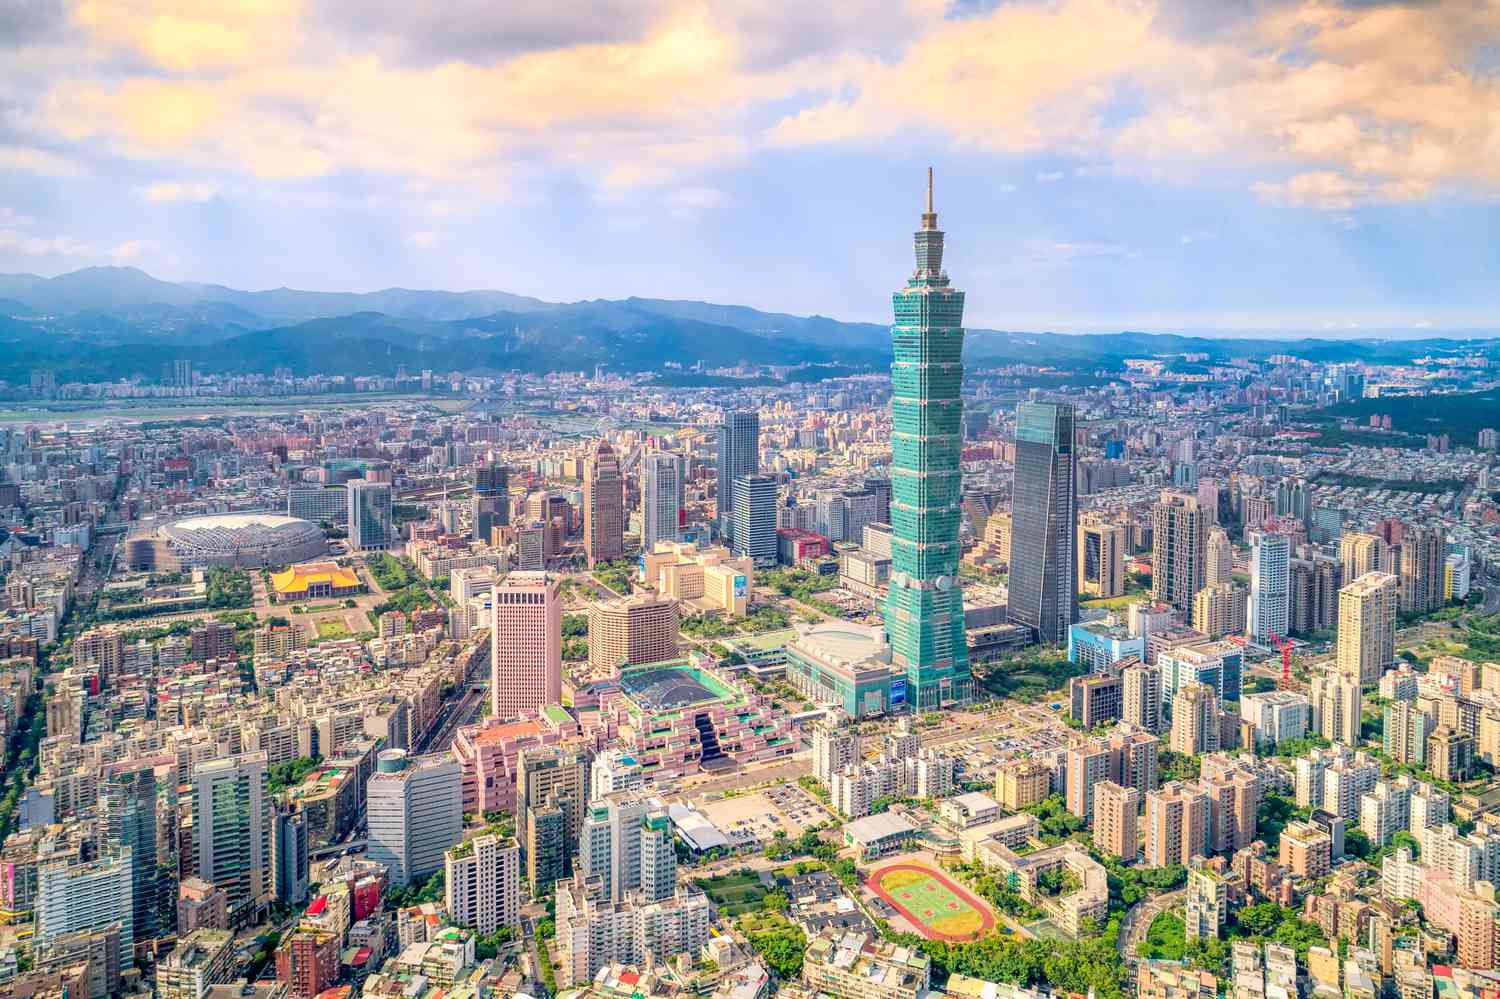 aerial-view-of-cityscape-at-taipei-center-district--taiwan-861177234-5b7f14a446e0fb005087f1e3